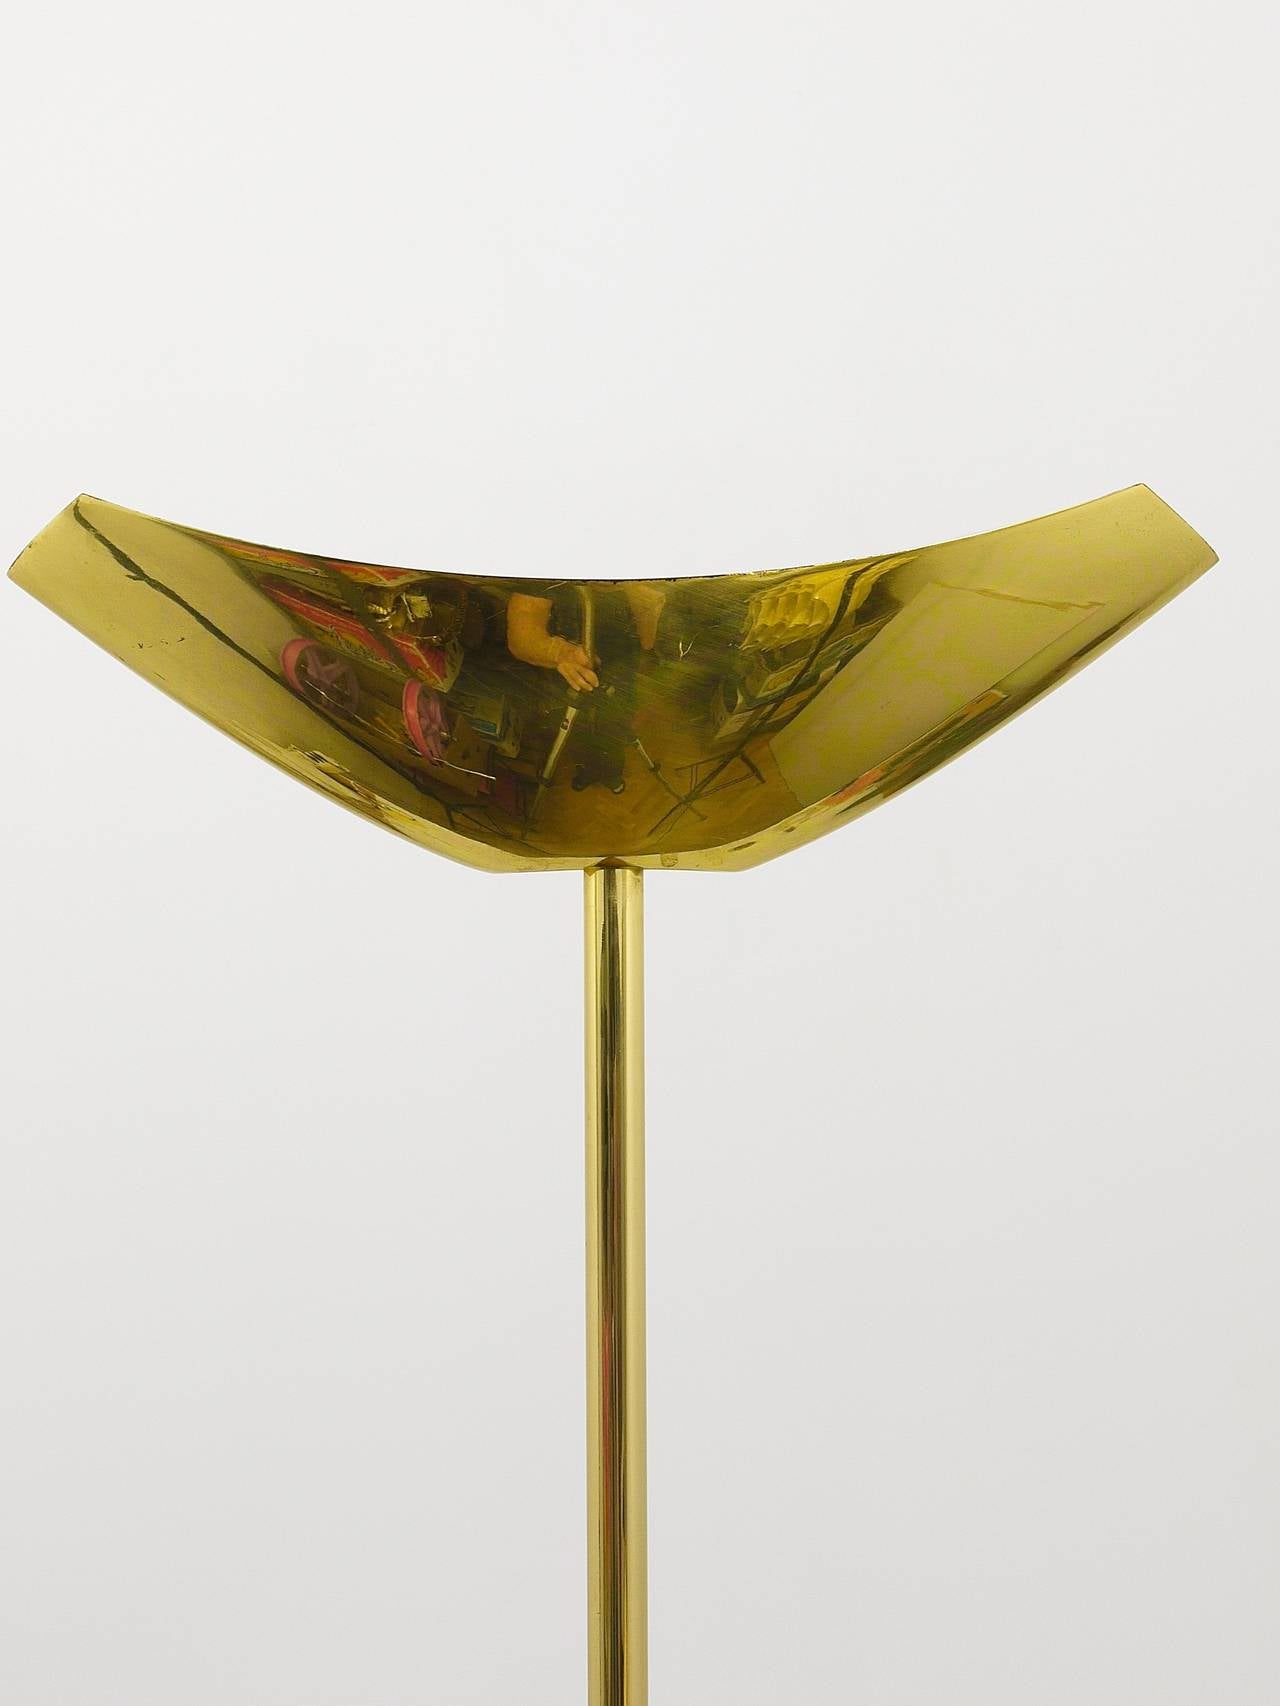 Rodolfo Dordoni Postmodern Brass & Wood Uplight Floor Lamp, Italy, 1980s For Sale 1